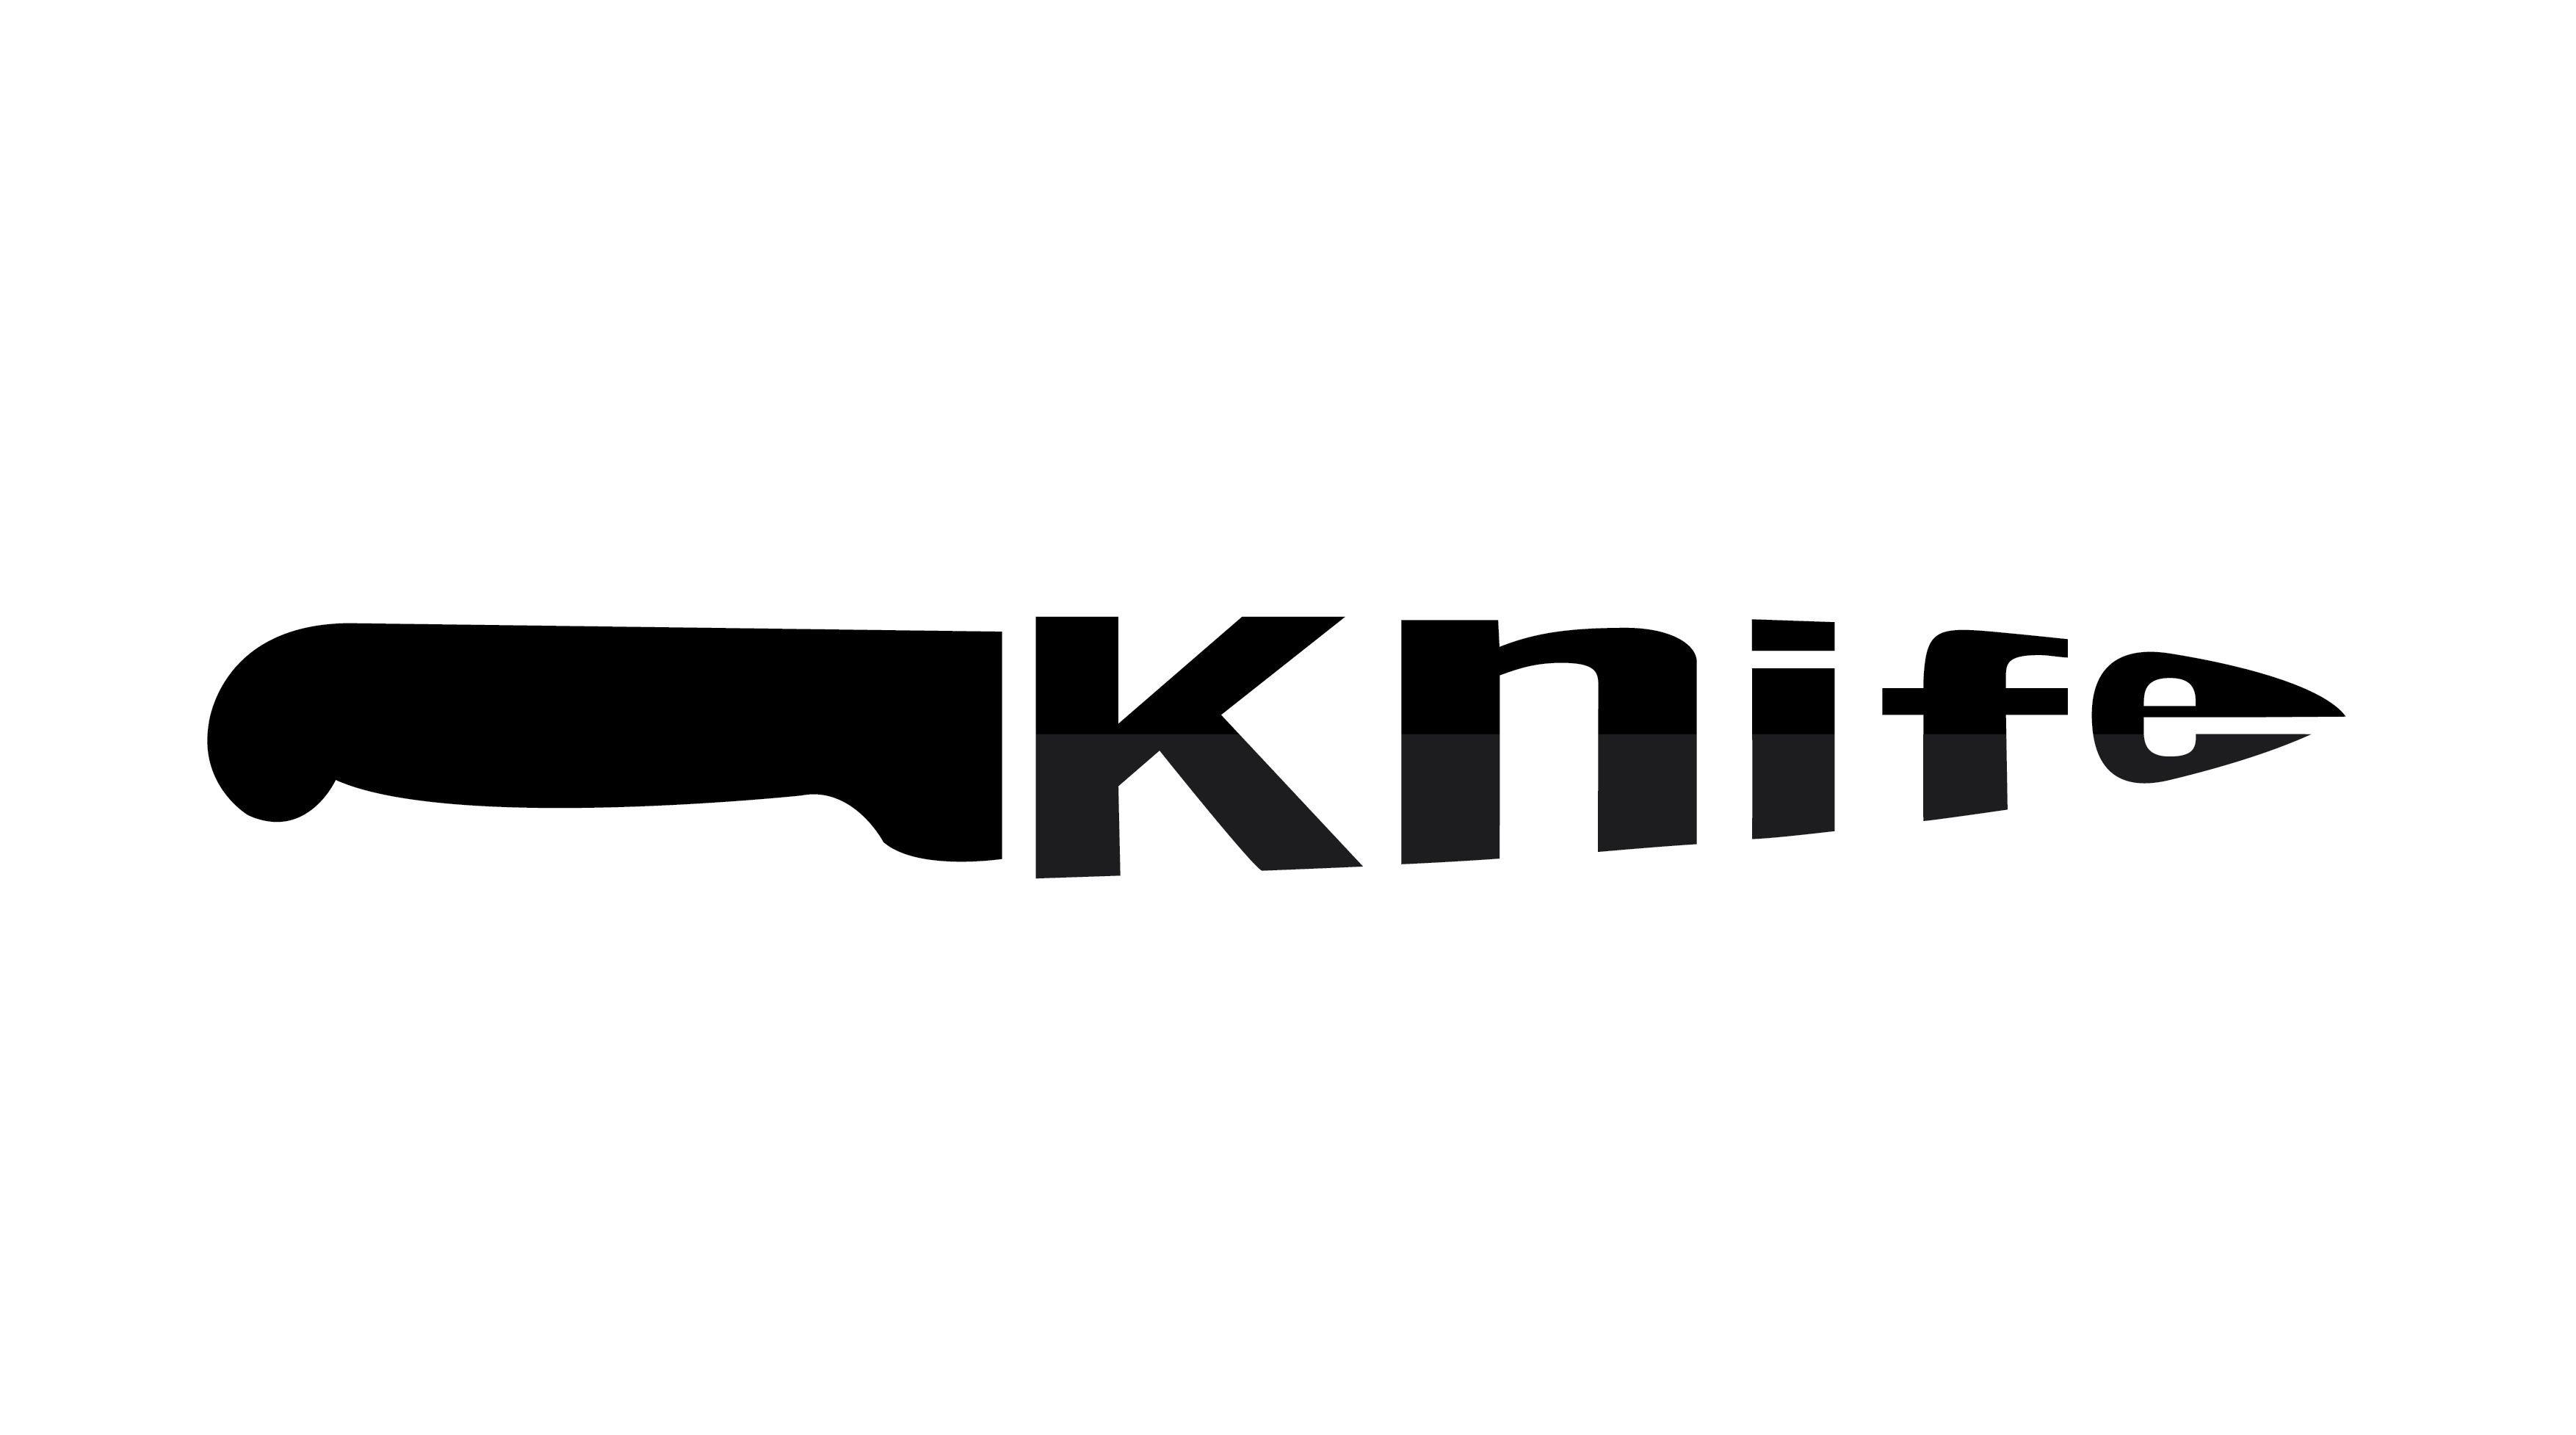 Knife Logo - Knife Logo | Creative Logo | Pinterest | Knife logo, Logos and Logo ...